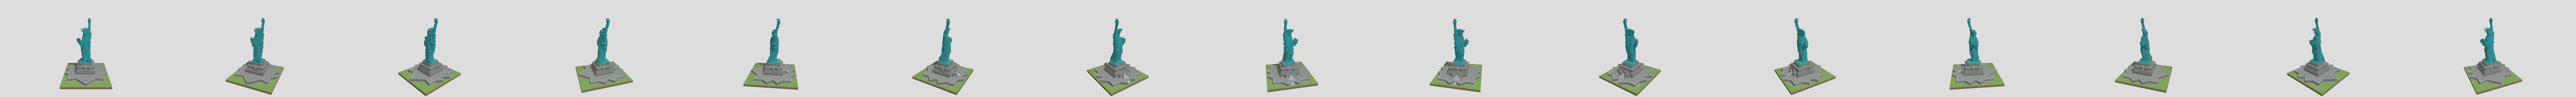 statue of liberty minecraft blueprints